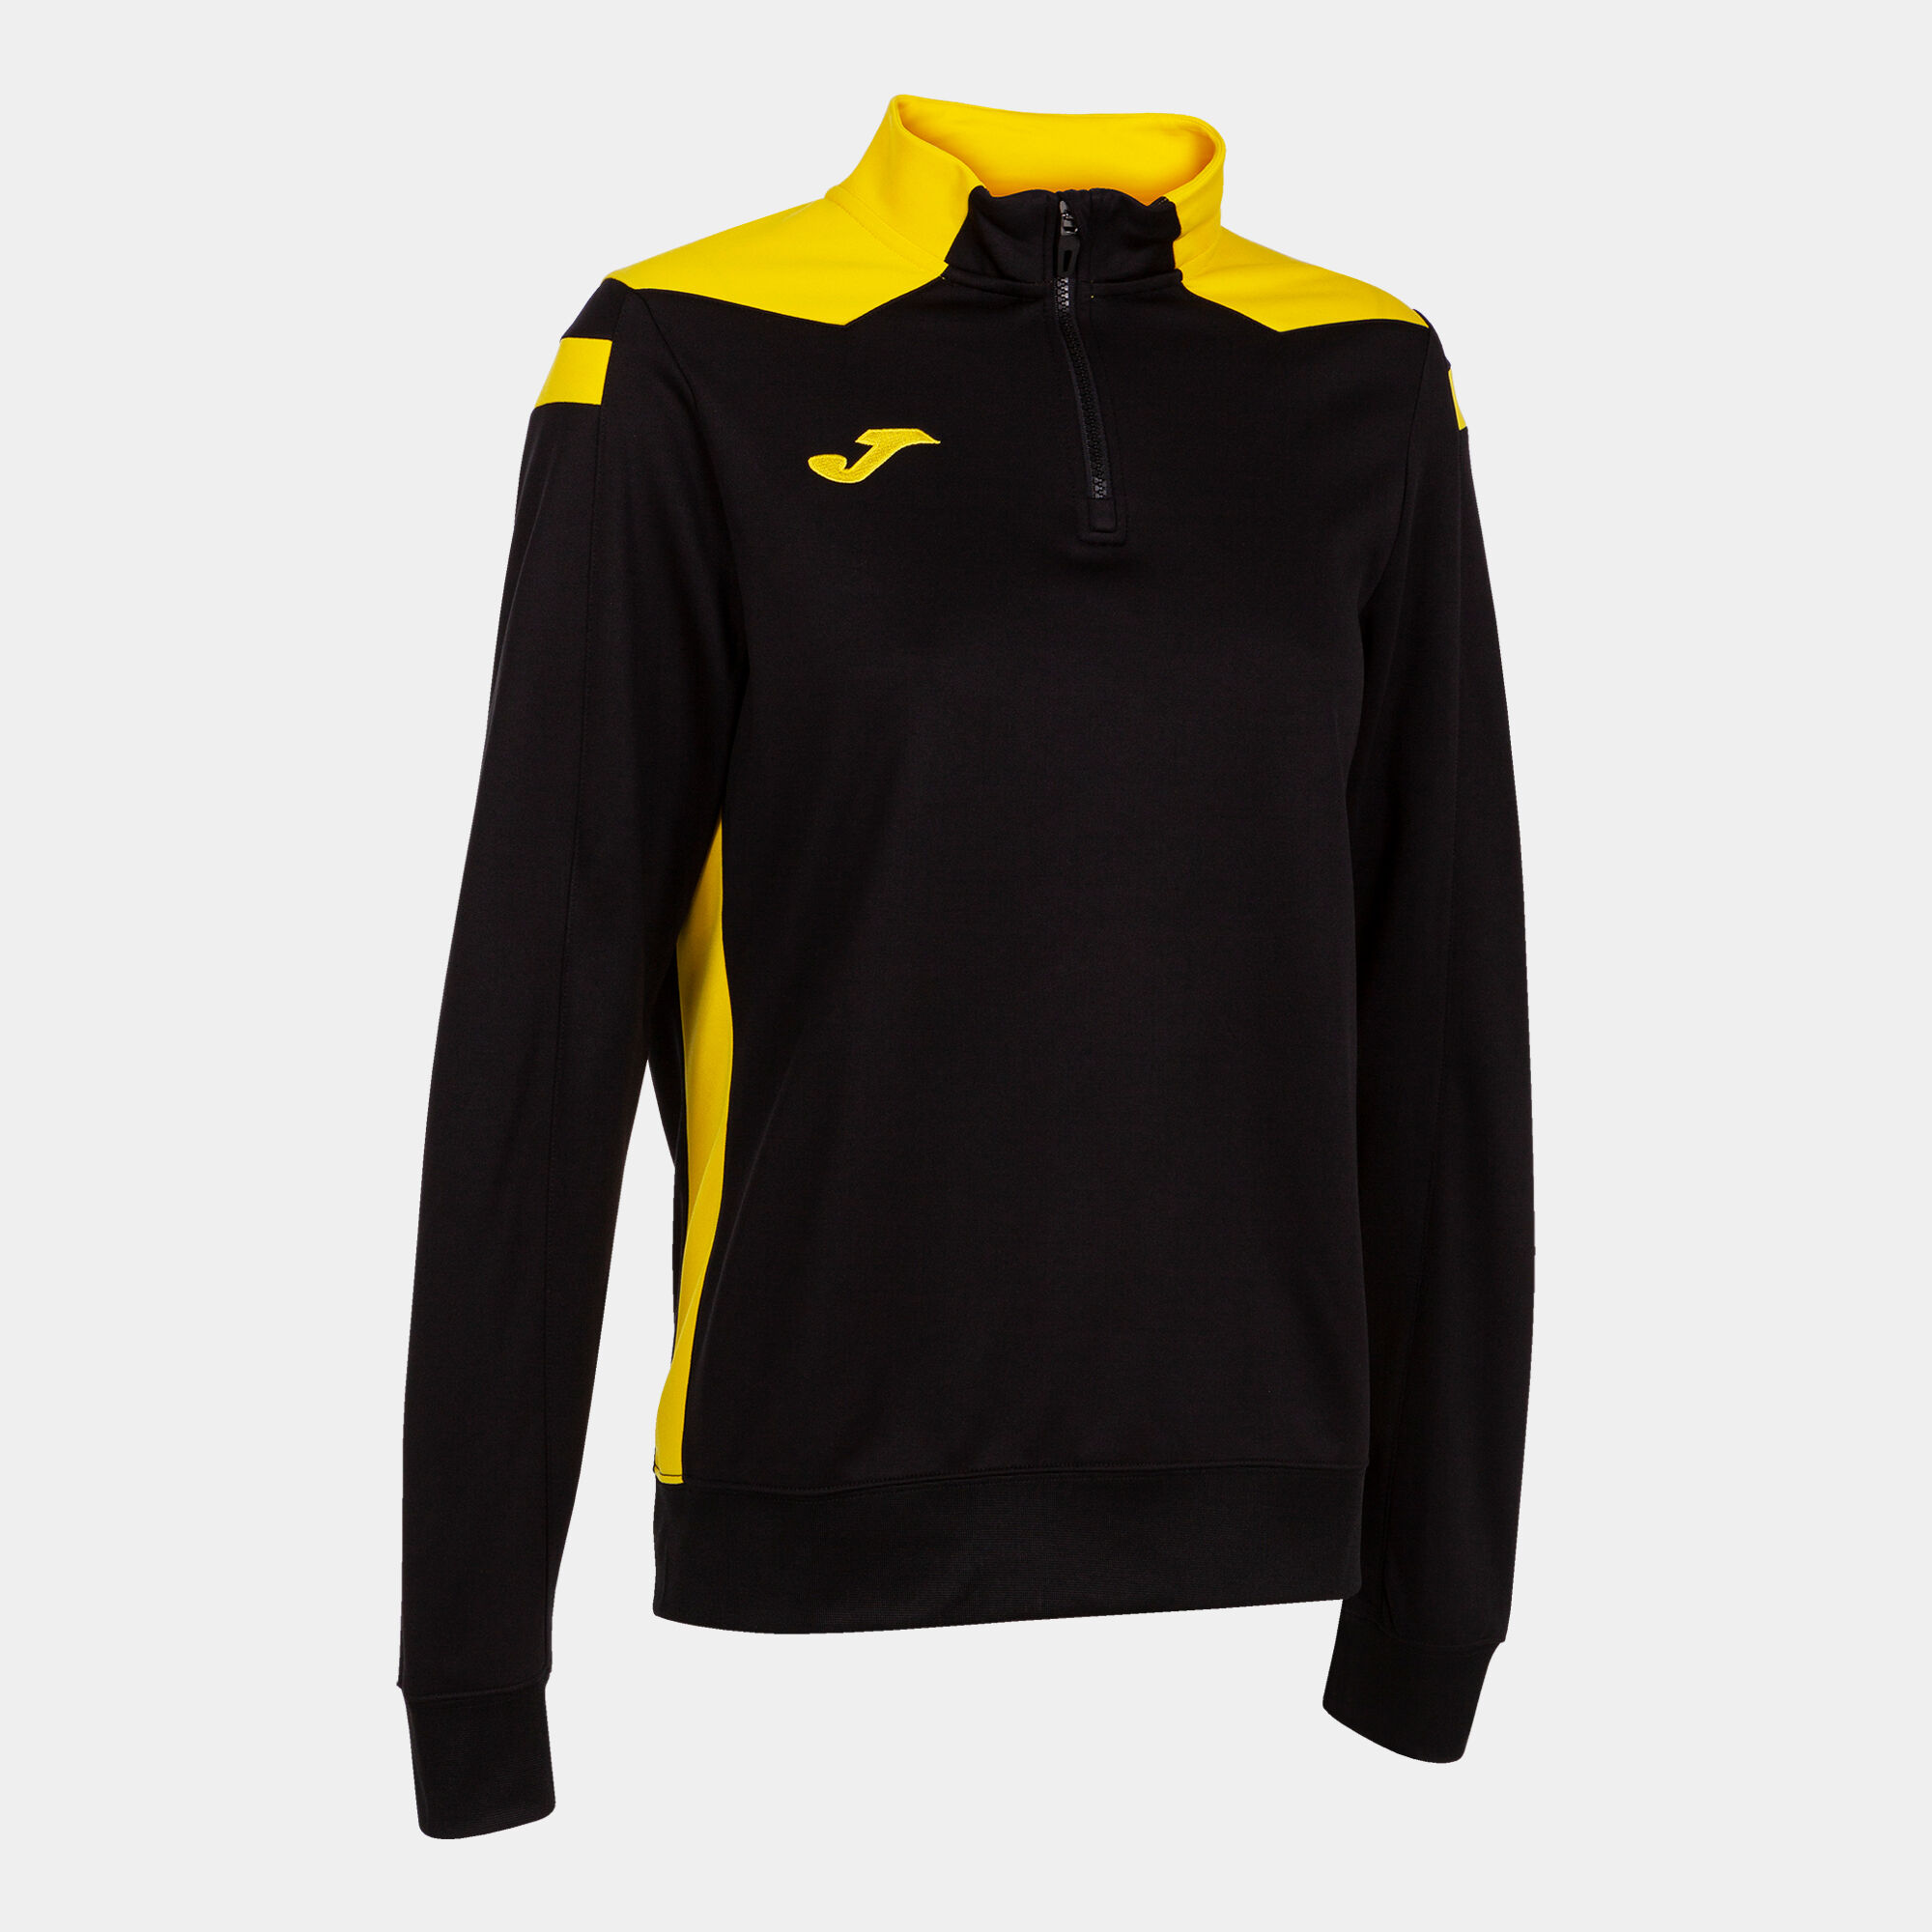 Sweatshirt woman Championship VI black yellow